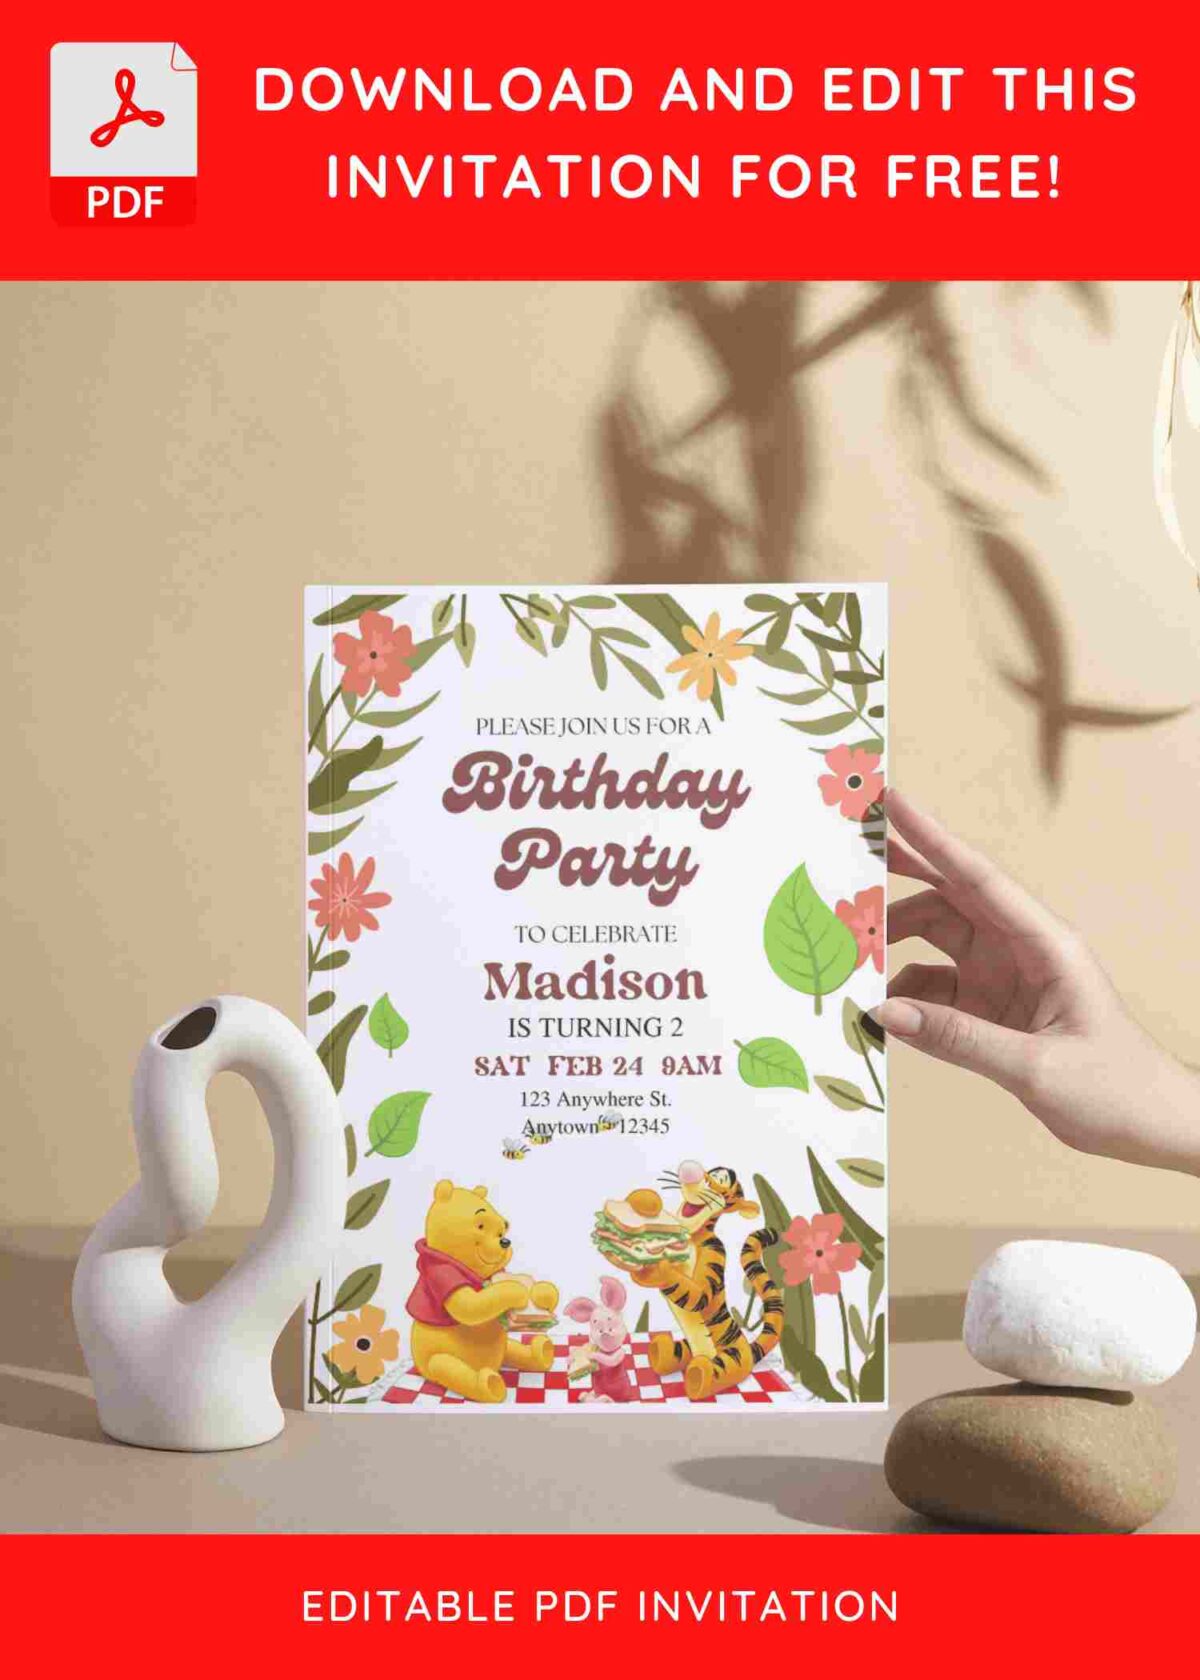 (Free Editable PDF) Enchanted Garden Picnic With Pooh Birthday Invitation Templates(Free Editable PDF) Enchanted Garden Picnic With Pooh Birthday Invitation Templates I